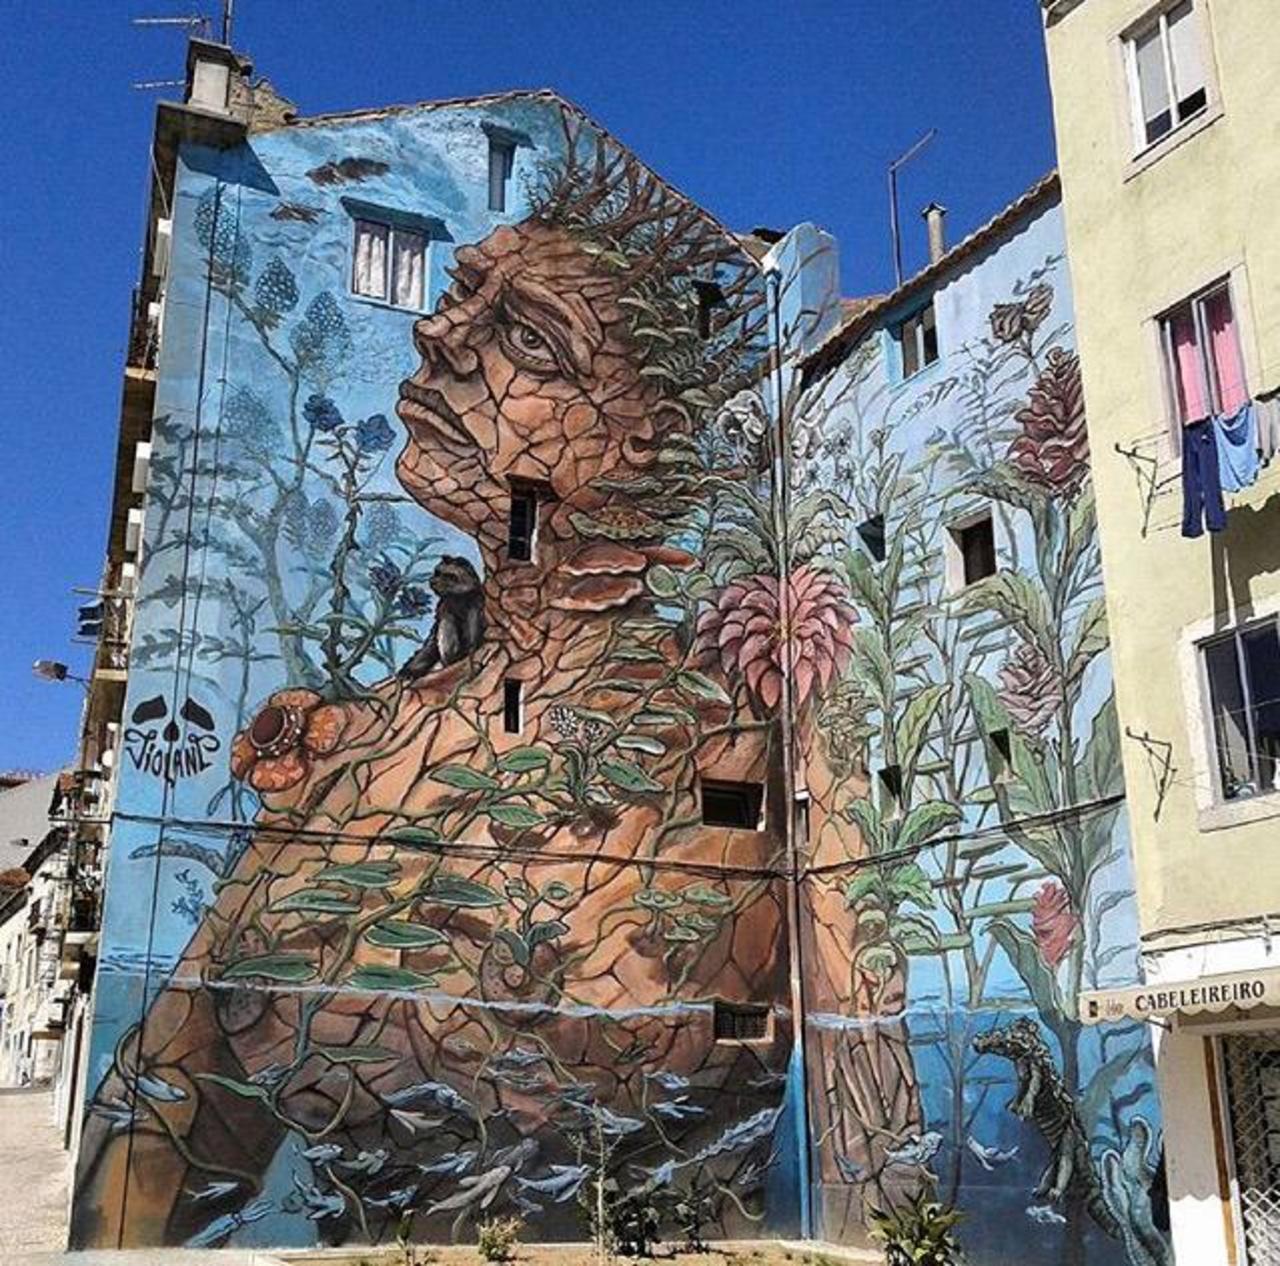 Street Art by Violant 

#art #graffiti #mural #streetart http://t.co/J1kgzidiZR